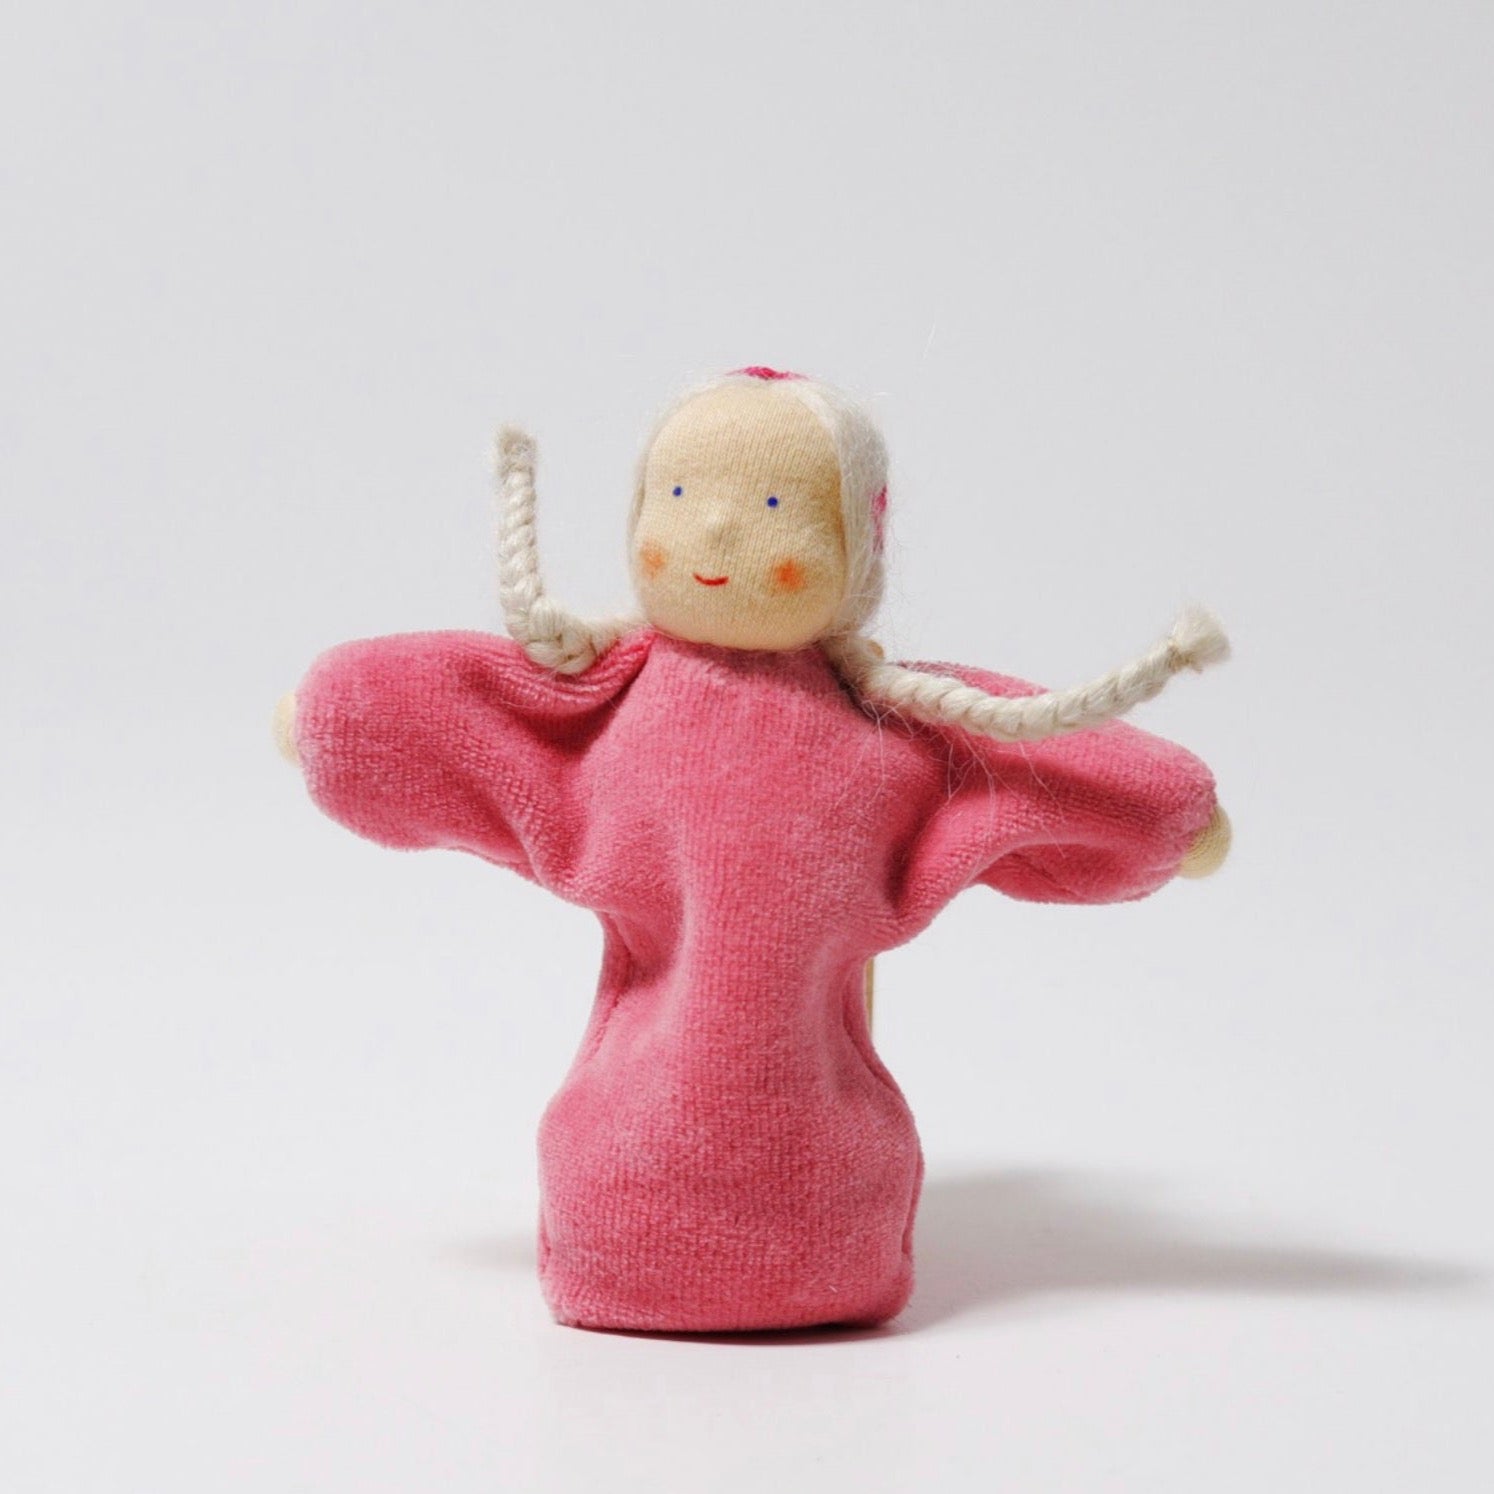 Grimm's Lavender Doll in Rose